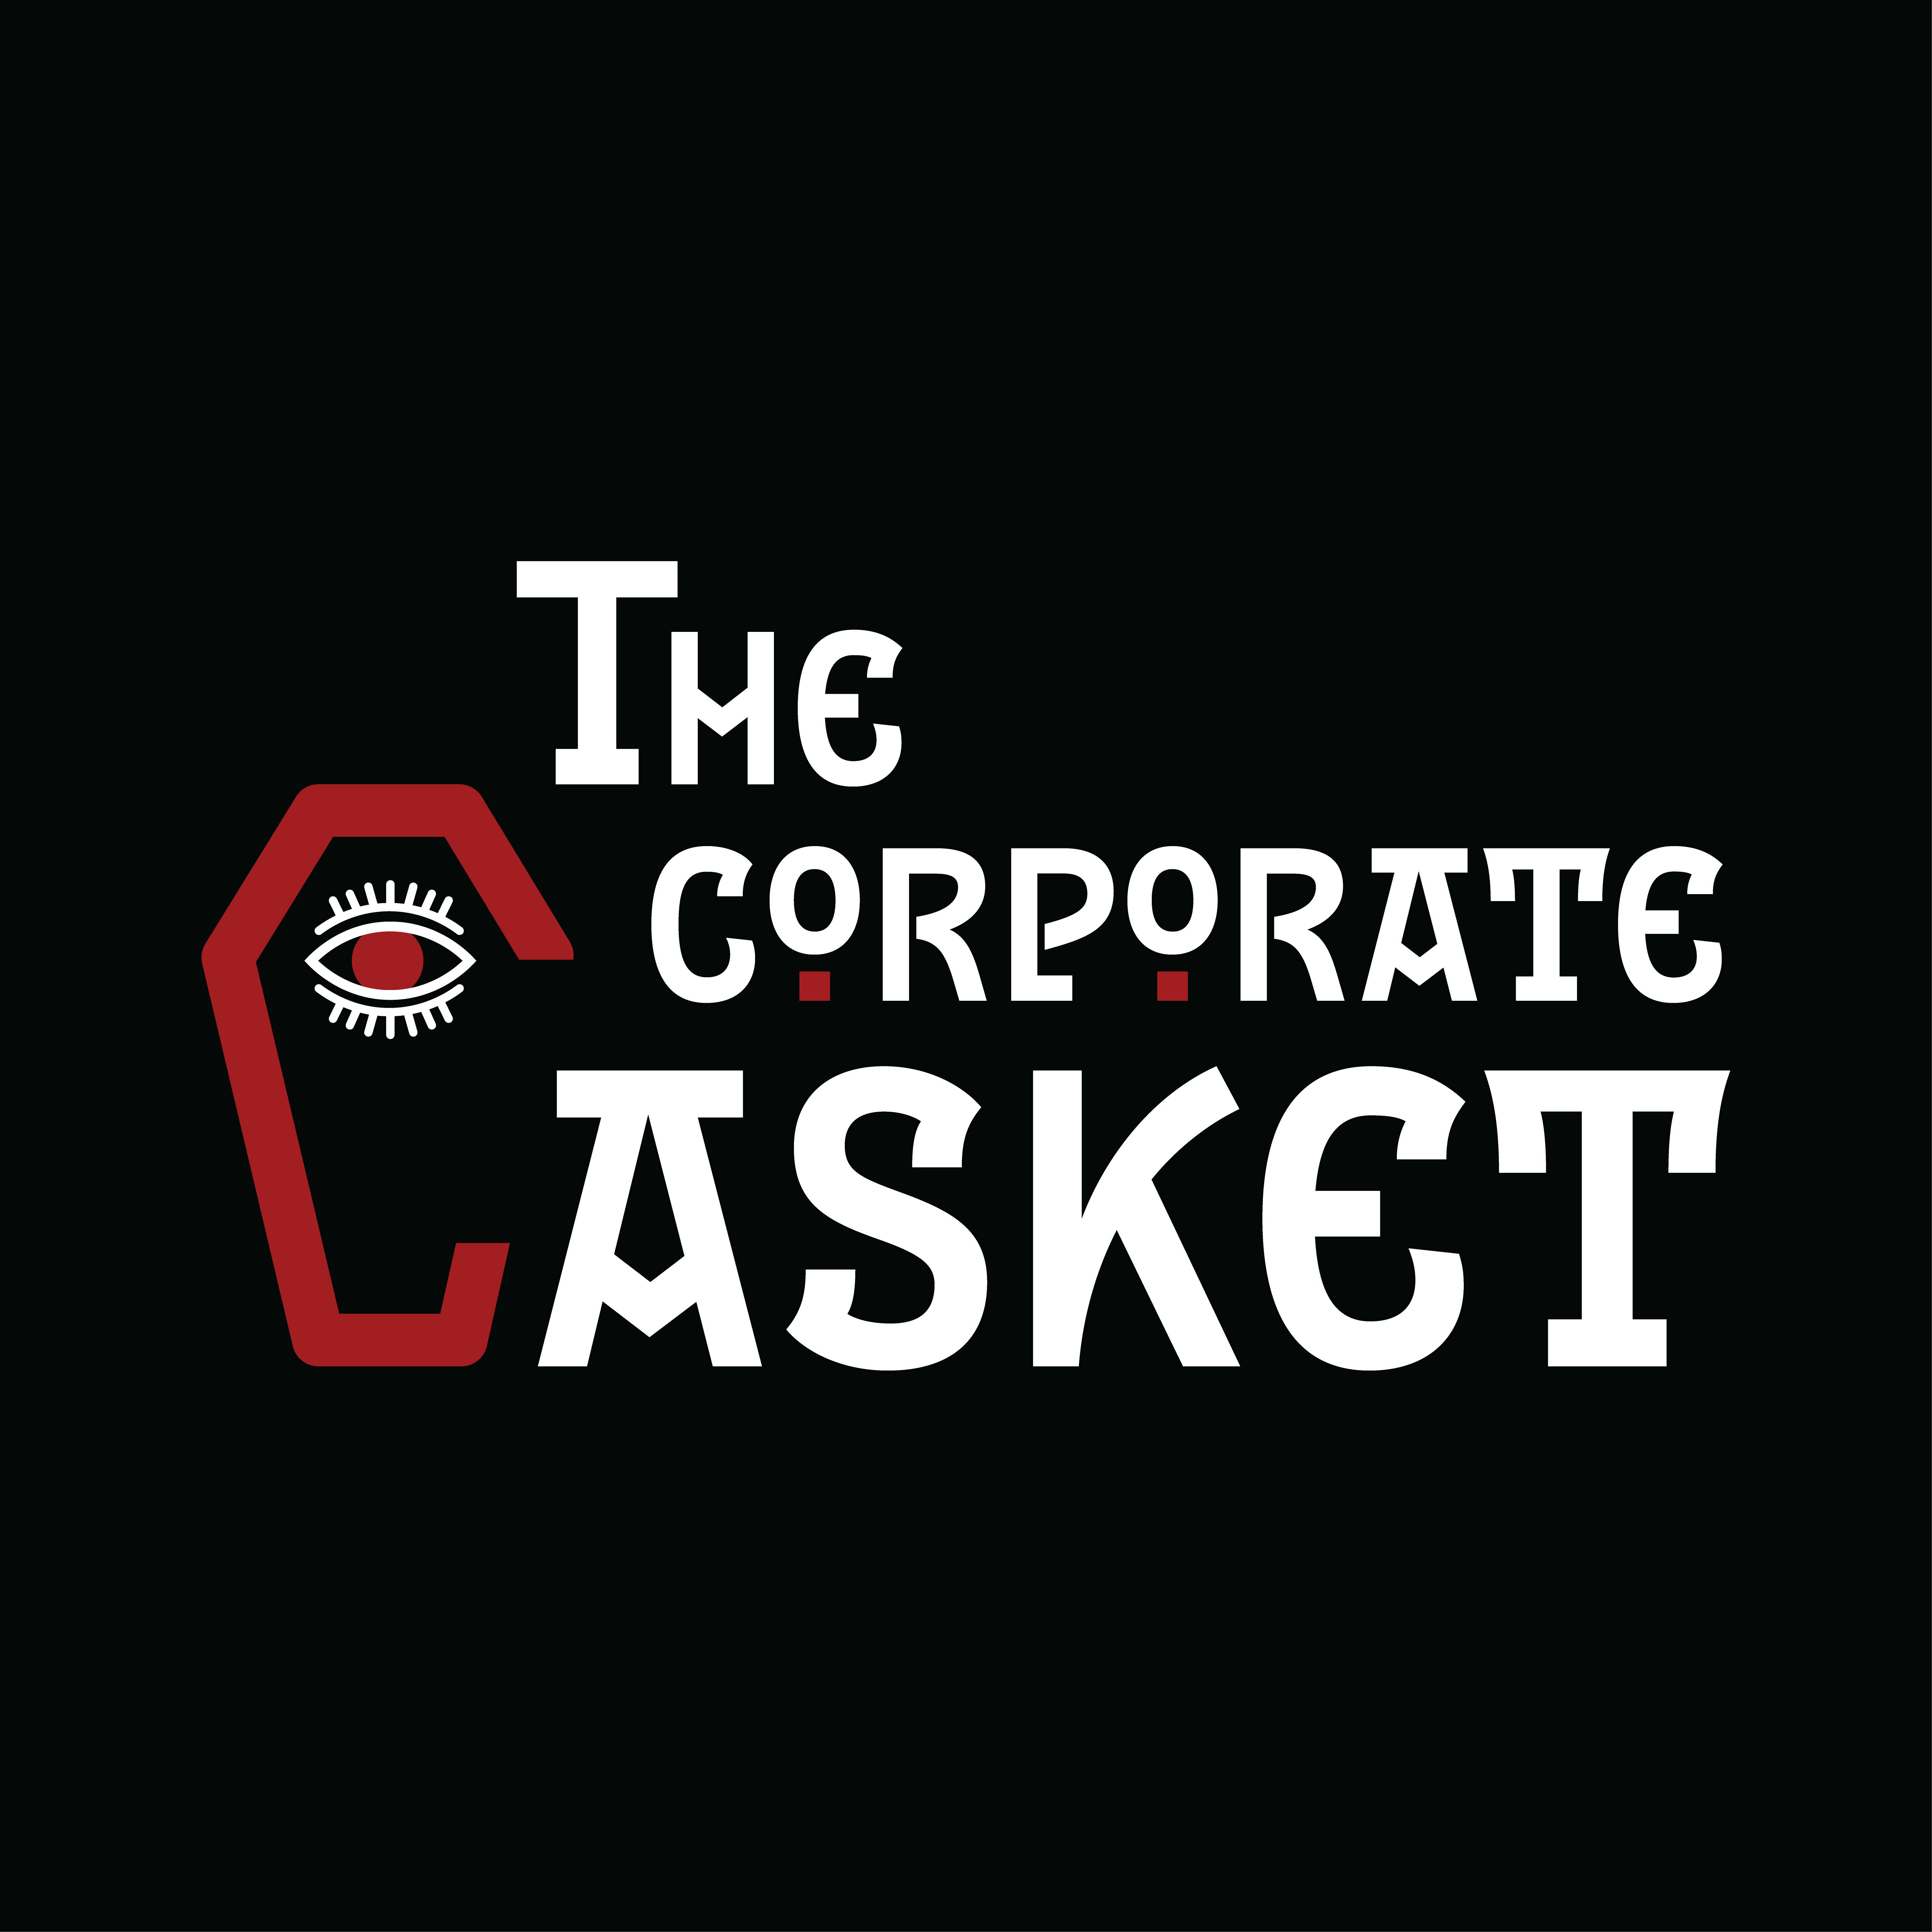 The Complete Pornhub Saga | Corporate Casket